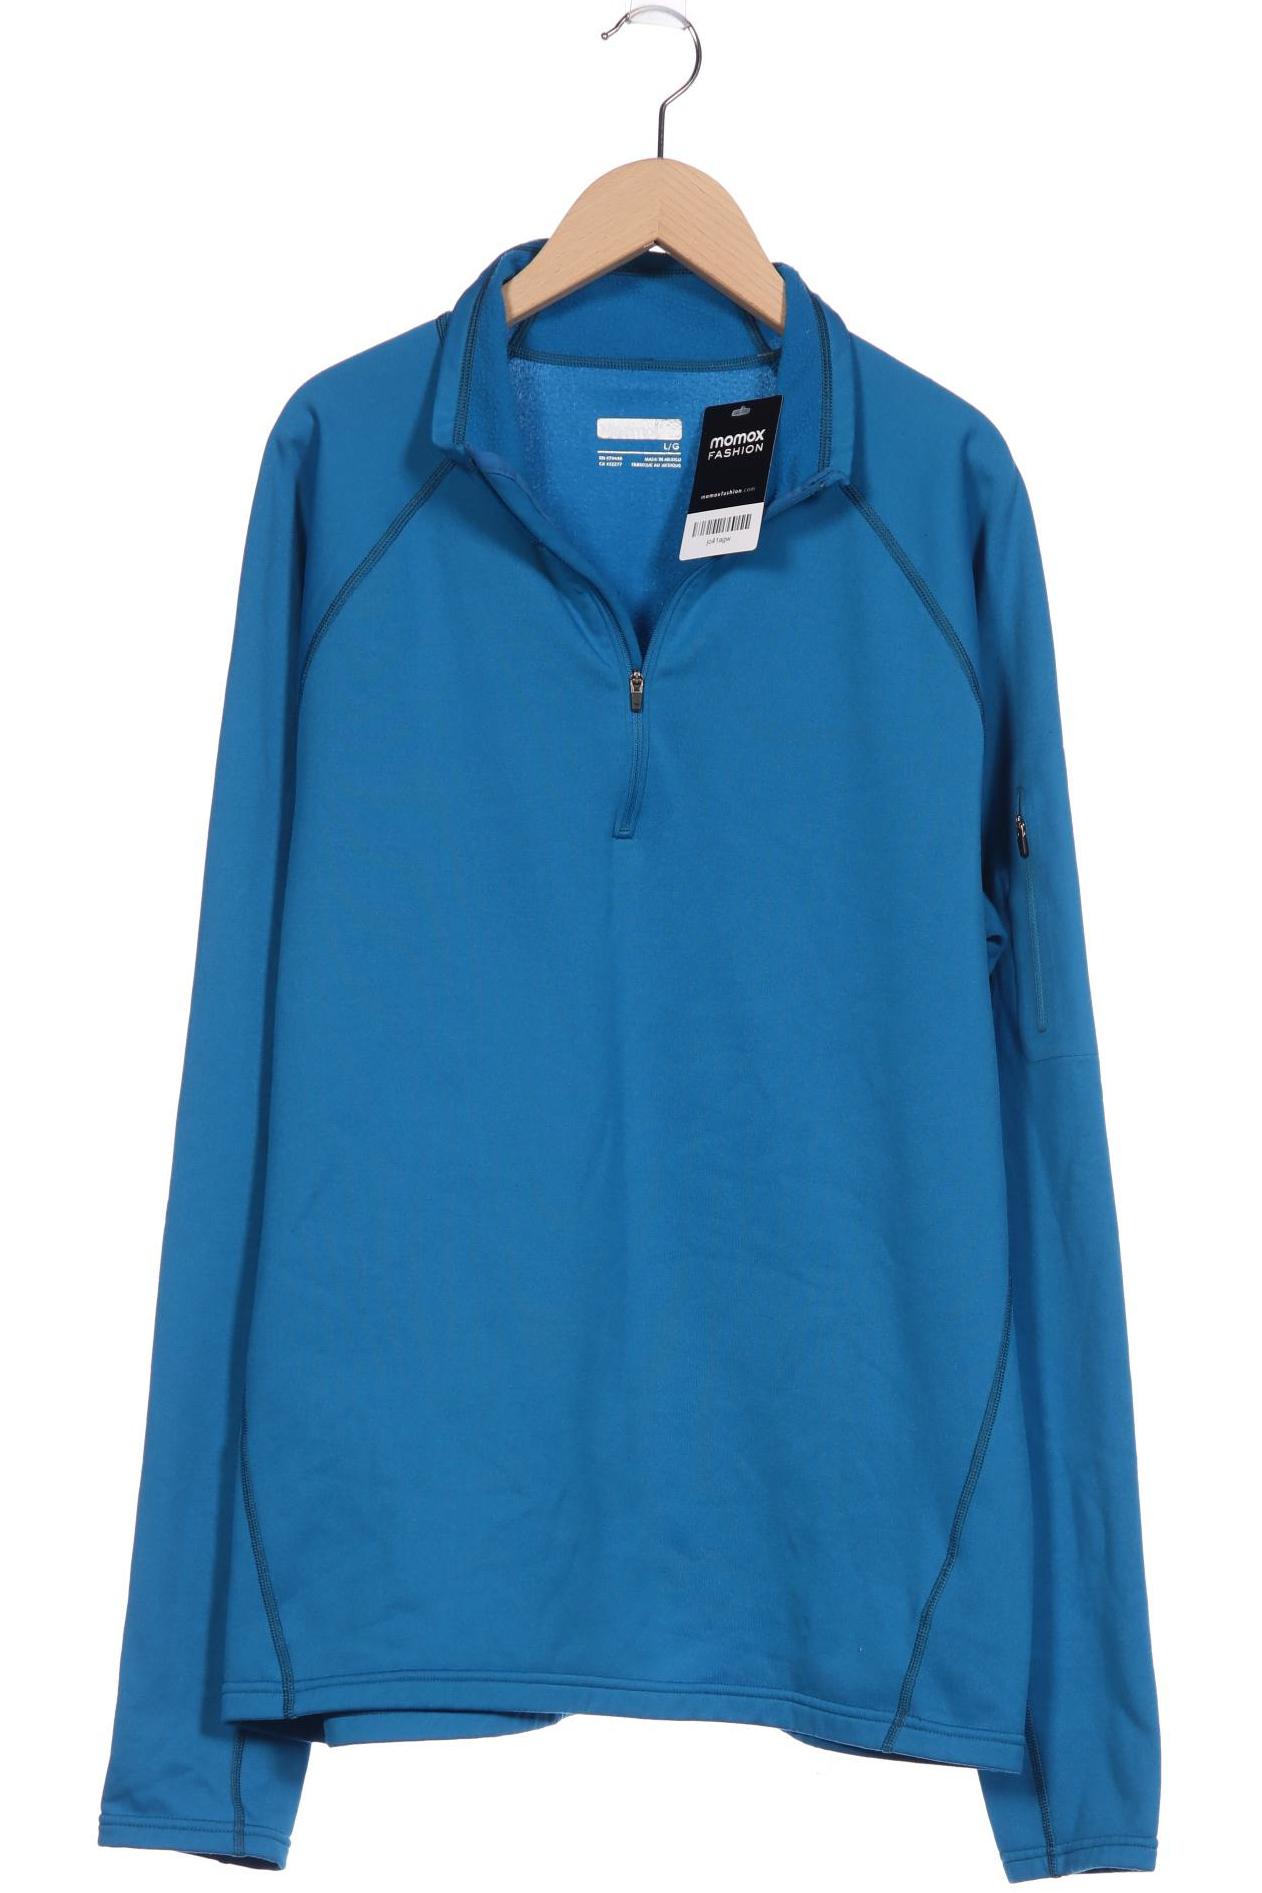 Marmot Herren Sweatshirt, blau, Gr. 52 von Marmot